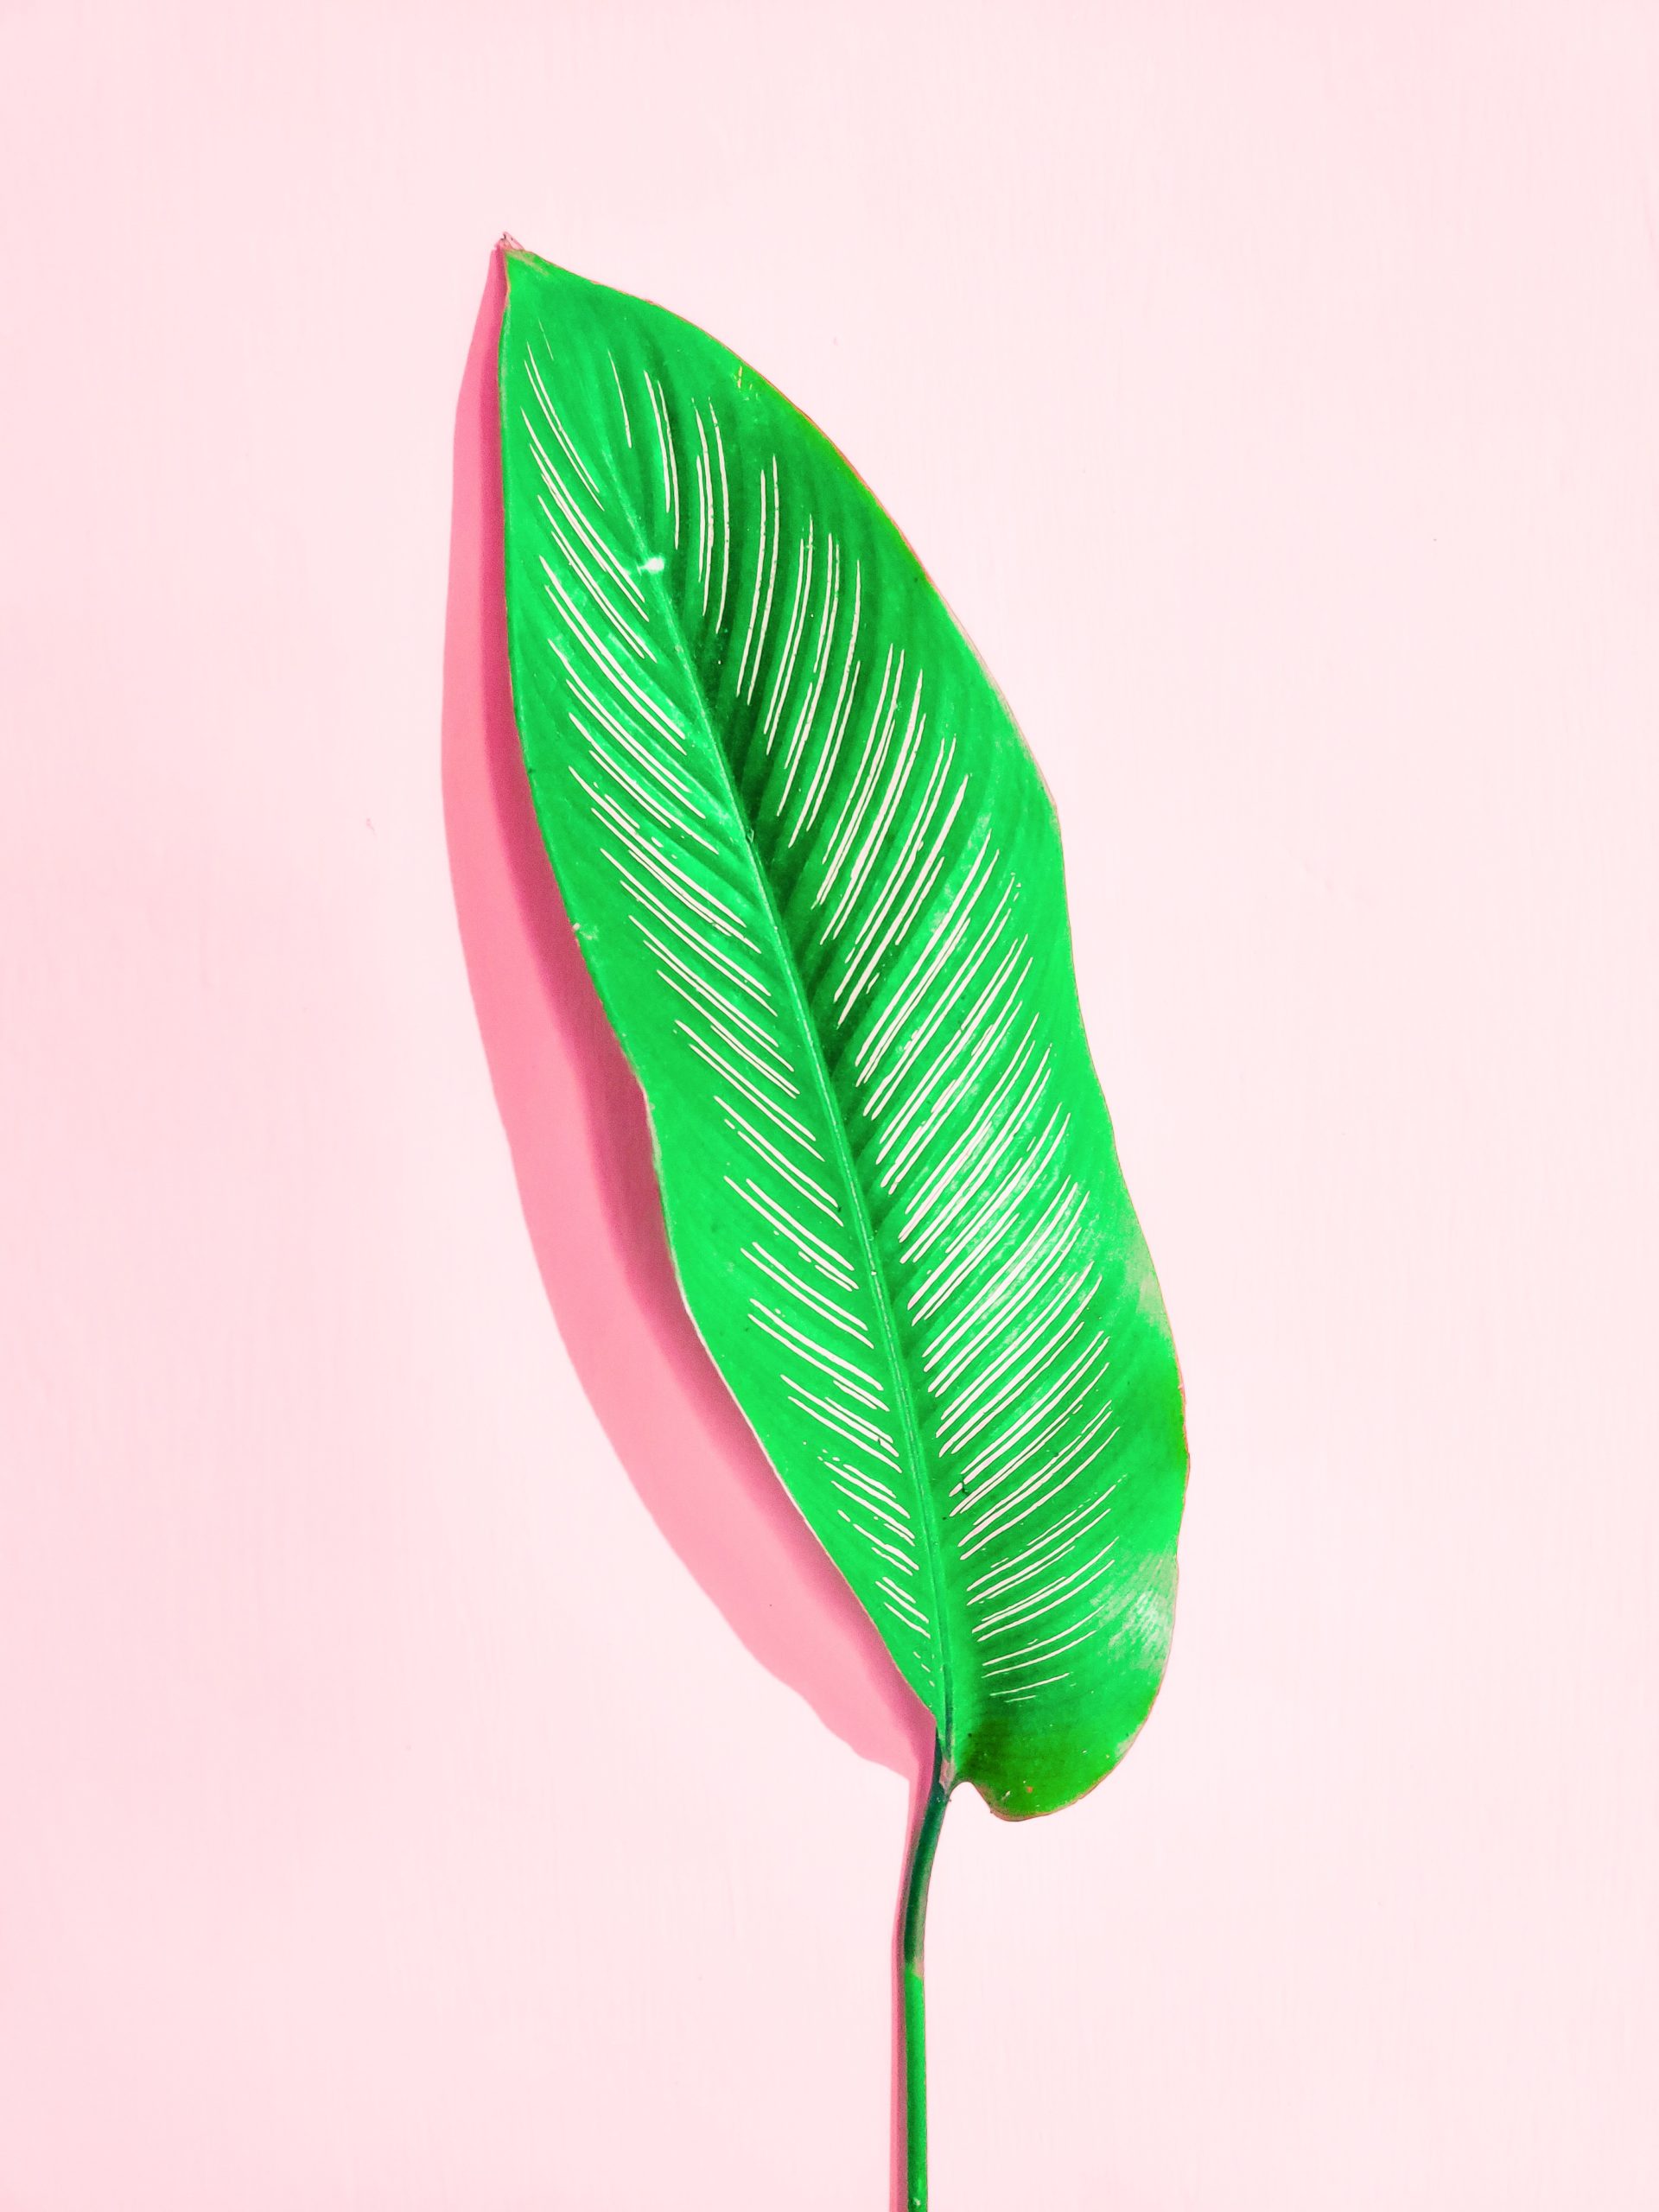 <img src="palm.jpg" alt="palm leaf on pink background"/> 